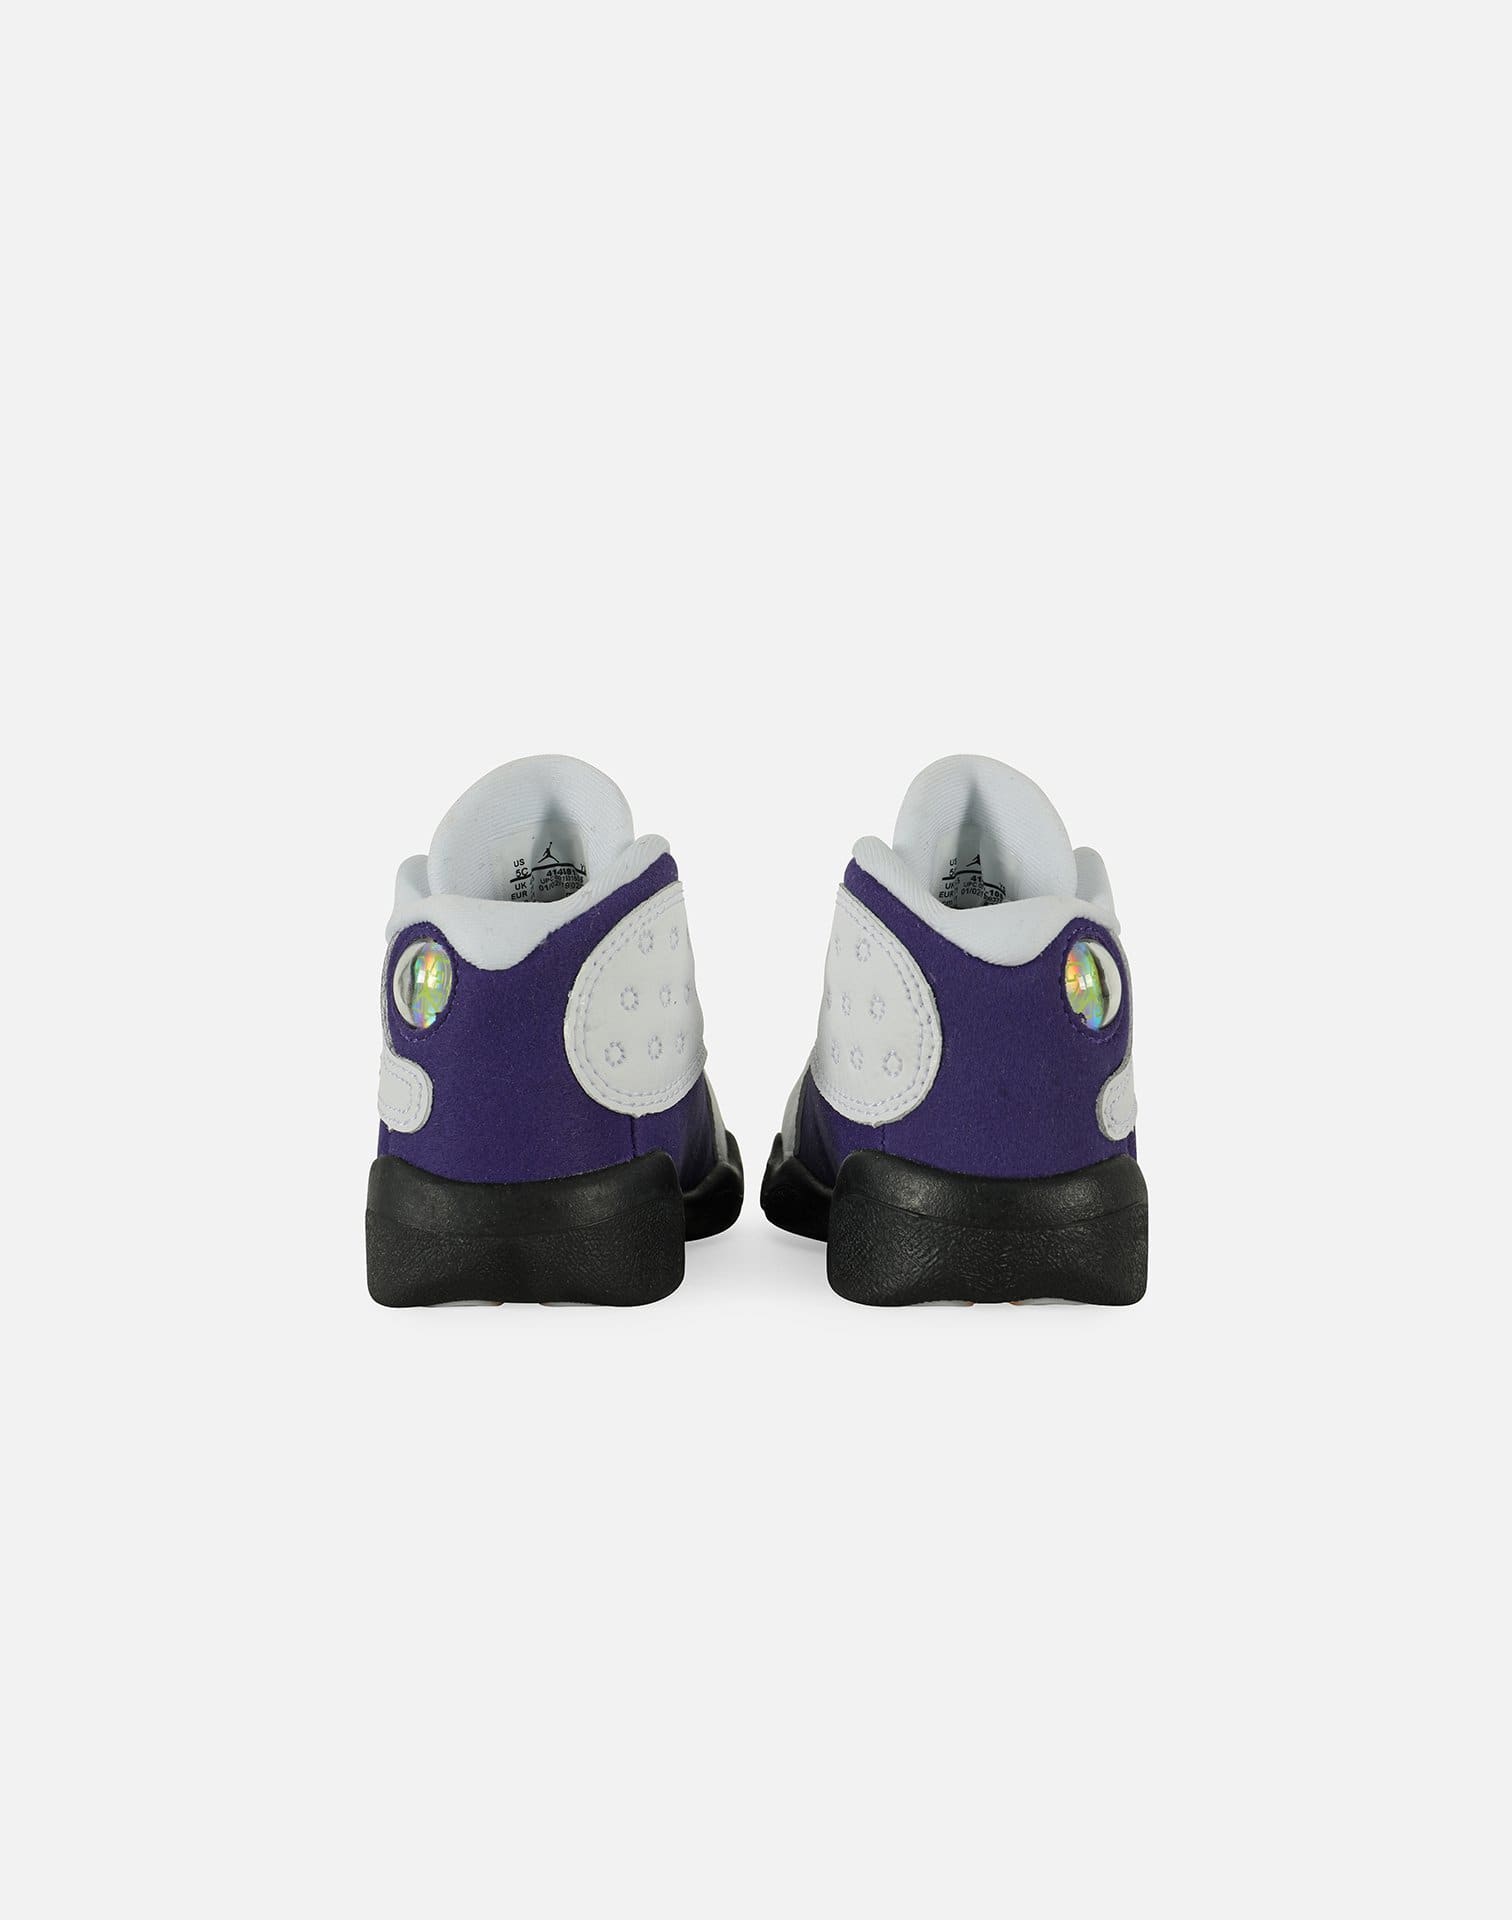 Nike Air Jordan Retro 13 Baby 5C White Purple Lakers Toddler Shoes  414581-105